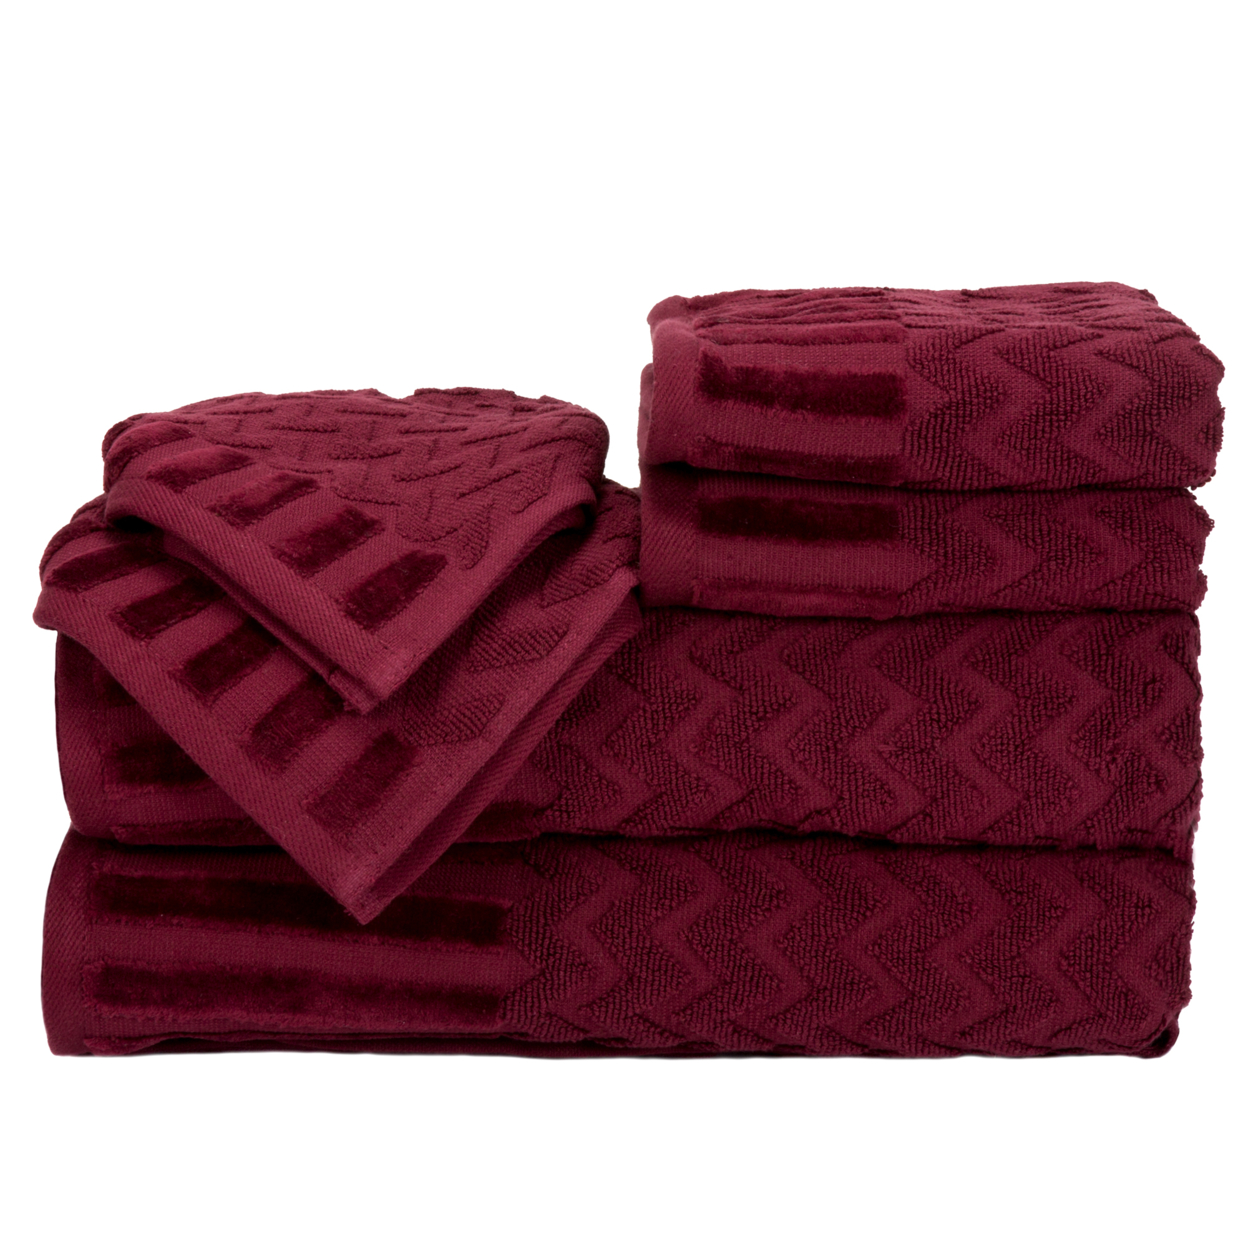 Lavish Home Chevron 100% Cotton 6 Piece Towel Set - Burgundy